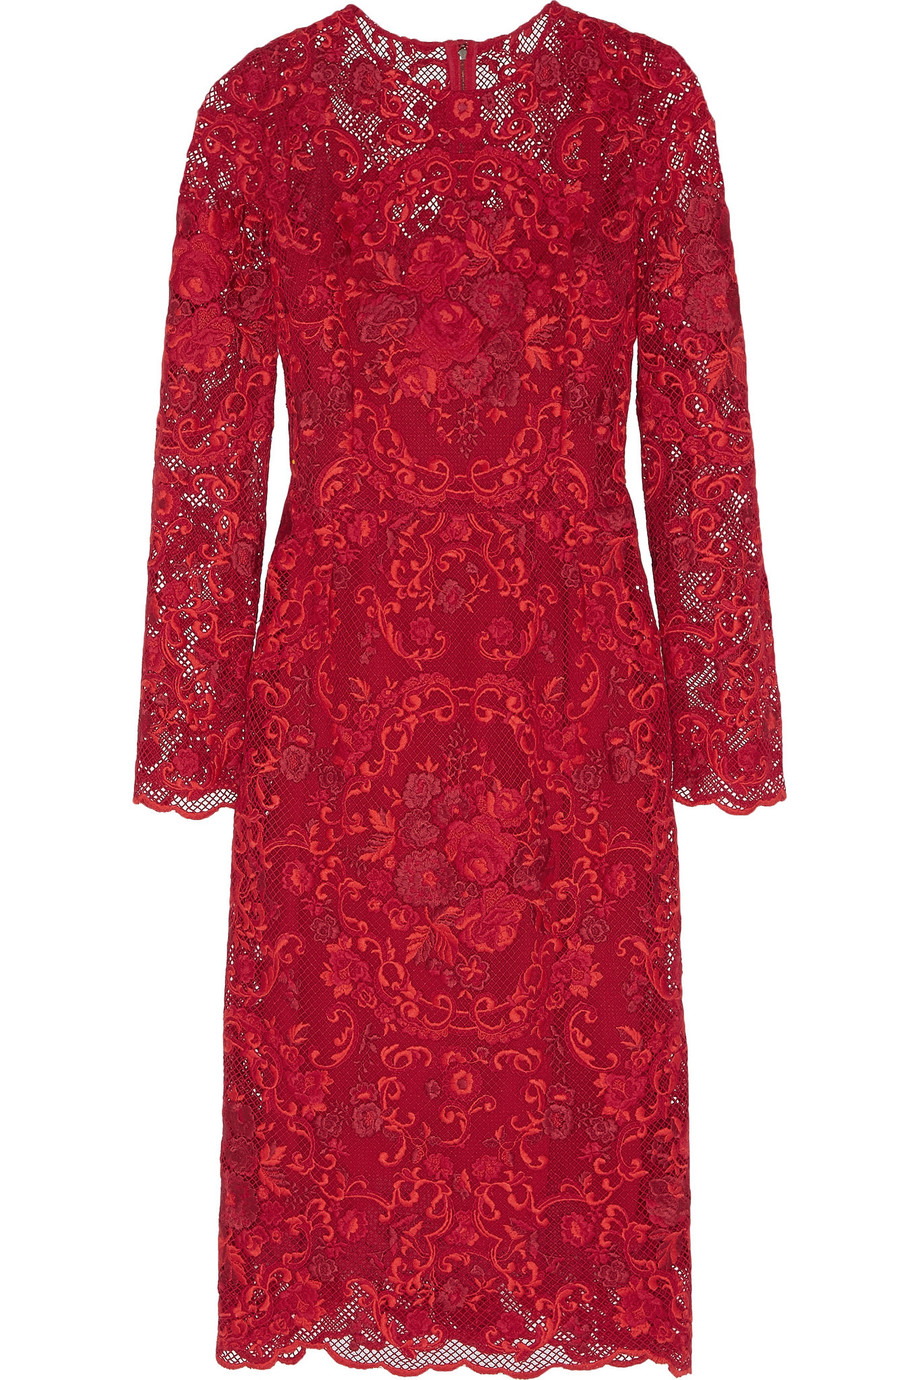 Dolce & Gabbana Guipure Lace Dress | ModeSens